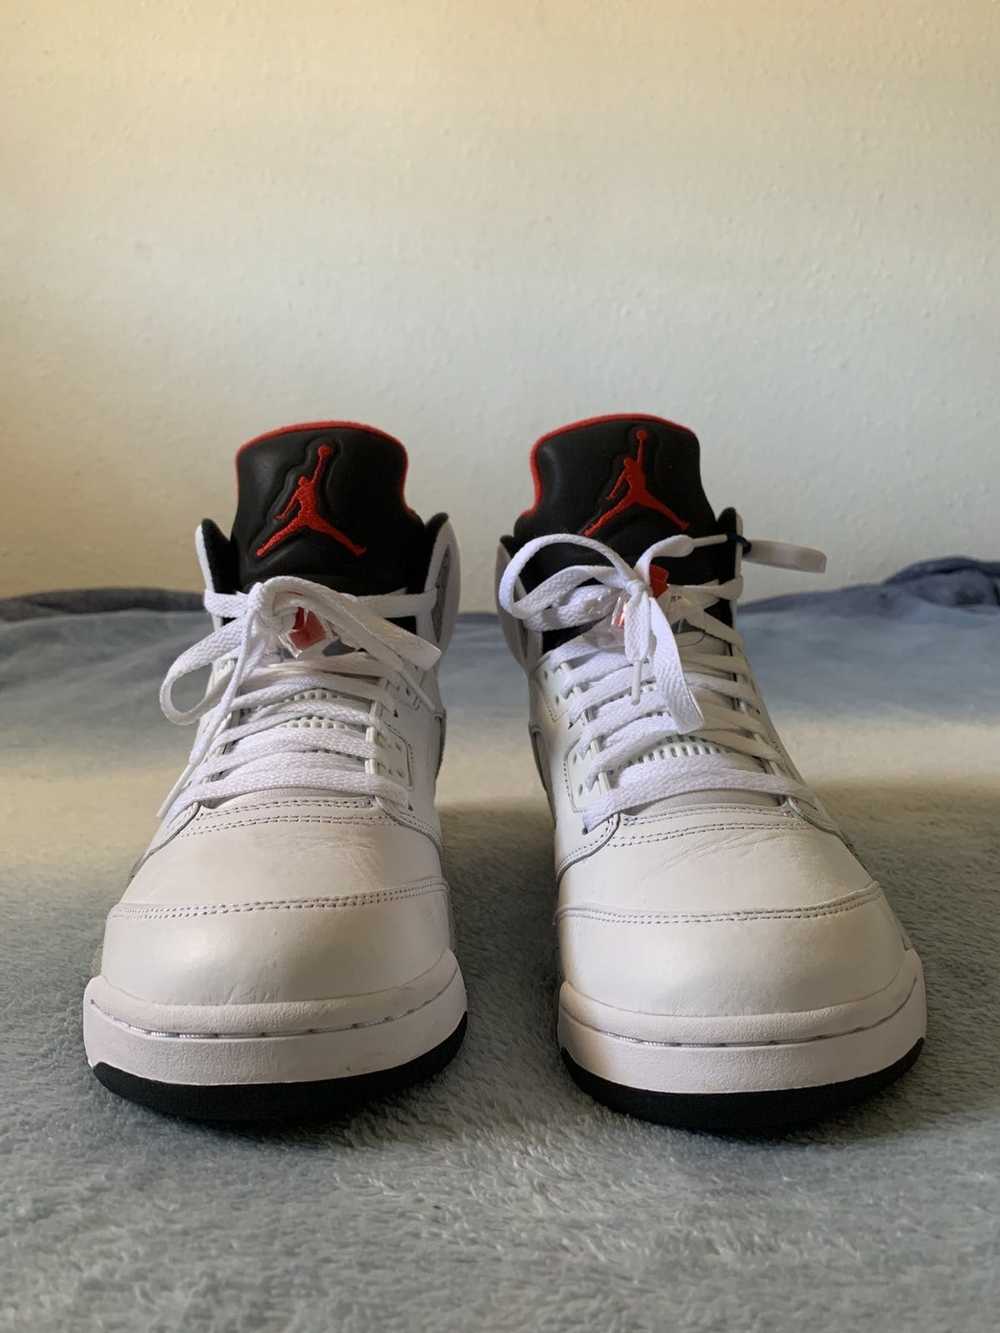 Jordan Brand × Nike Jordan Retro 5 white cement - image 3